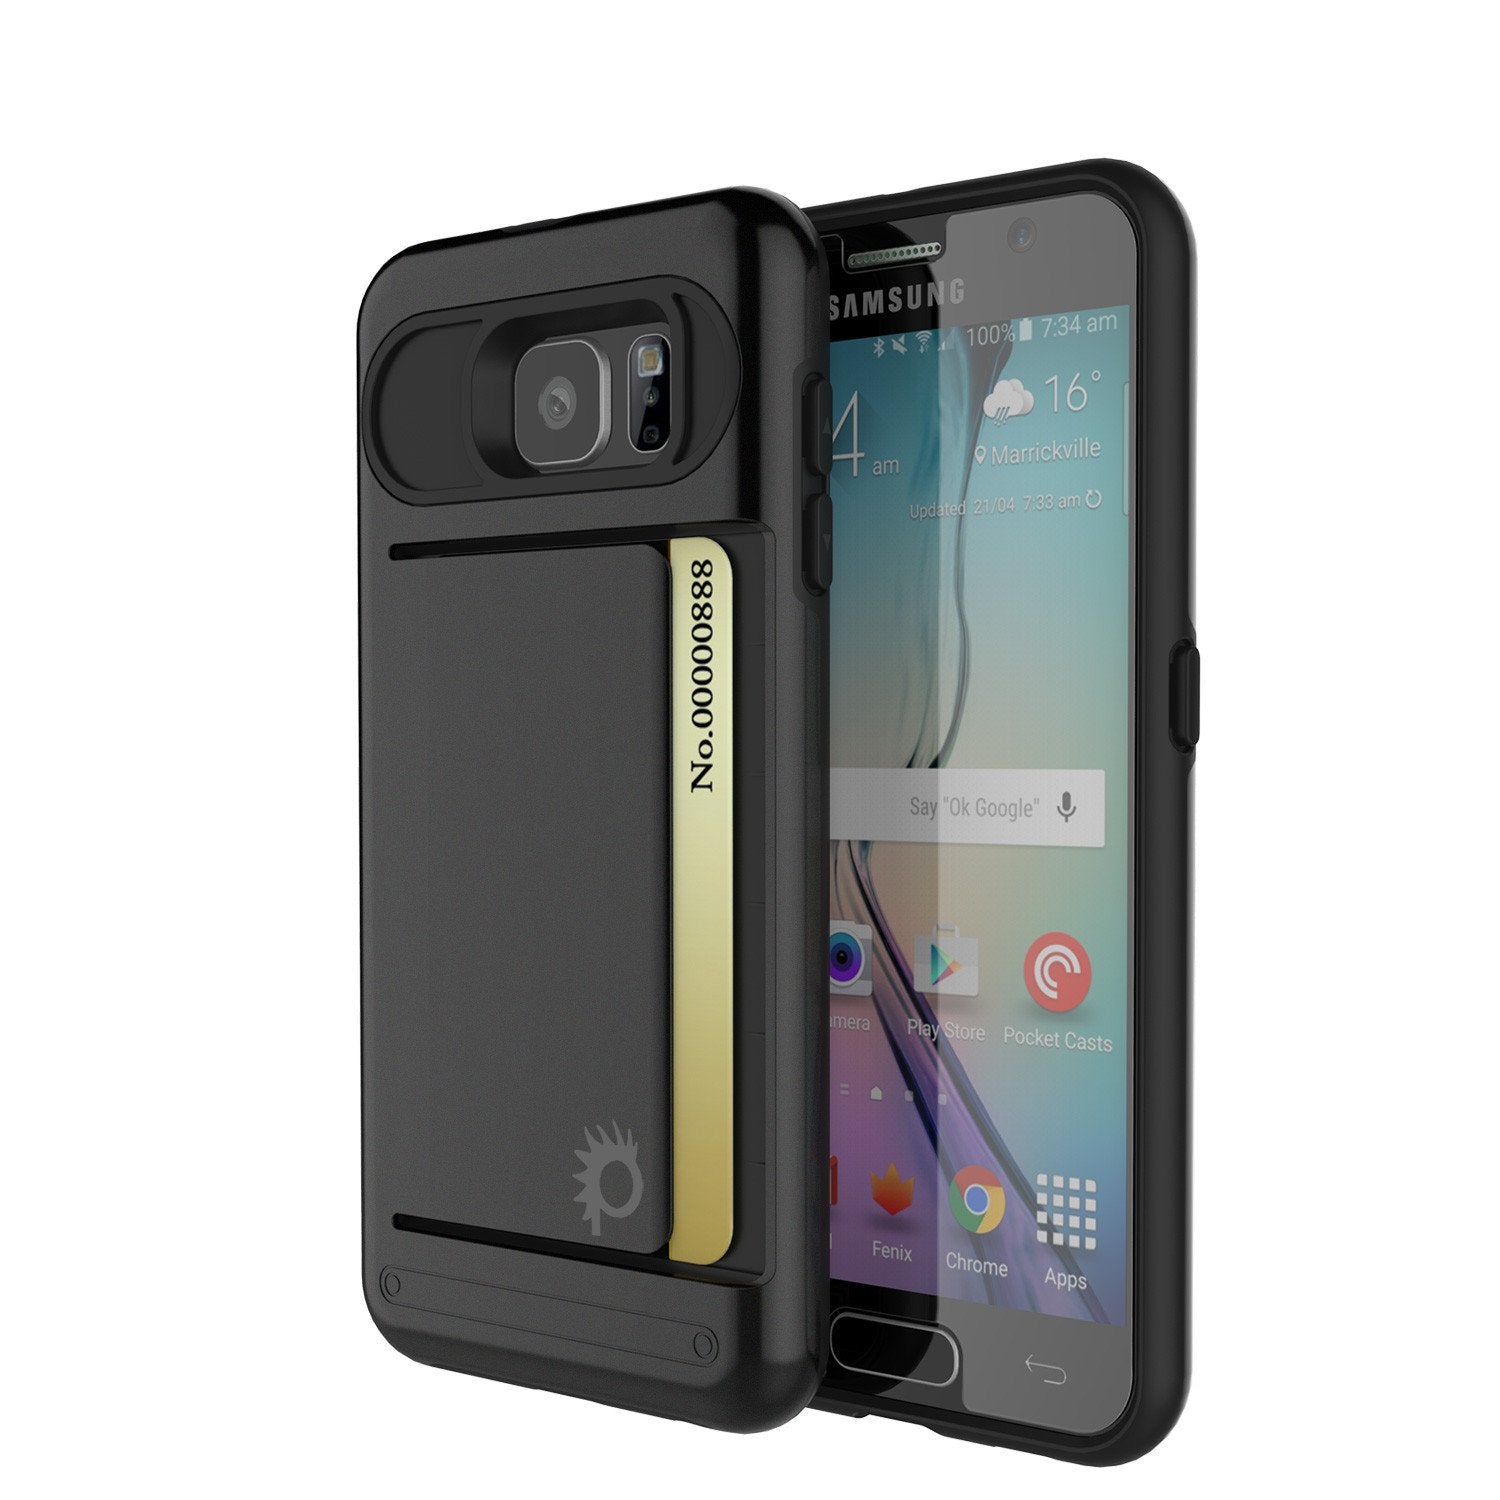 Galaxy S6 EDGE Plus Case PunkCase CLUTCH Black Series Slim Armor Soft Cover Case w/ Screen Protector